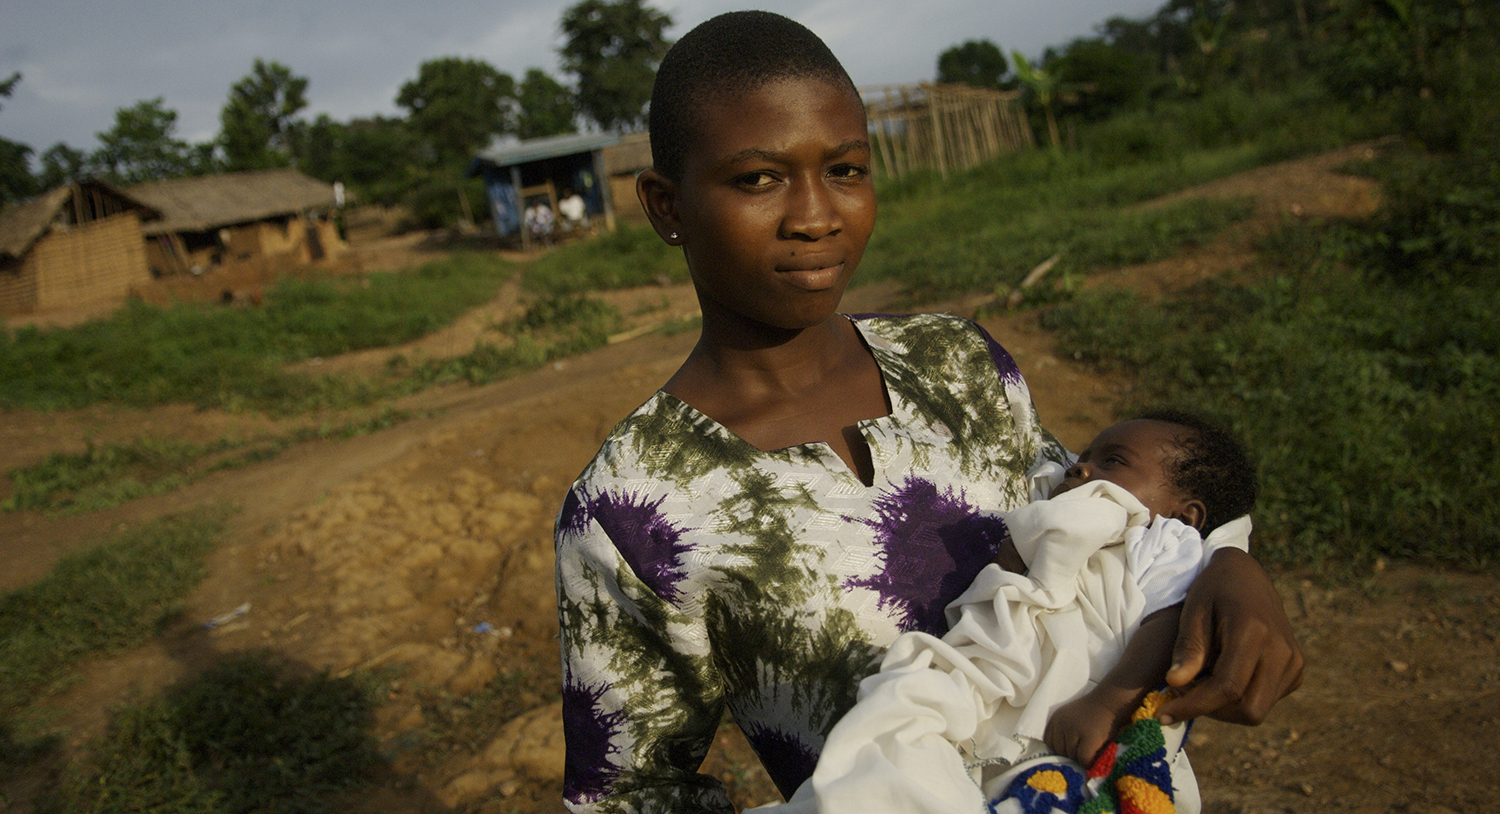 Ghana_young-woman-child-Jonathan-Ernst-World-Bank